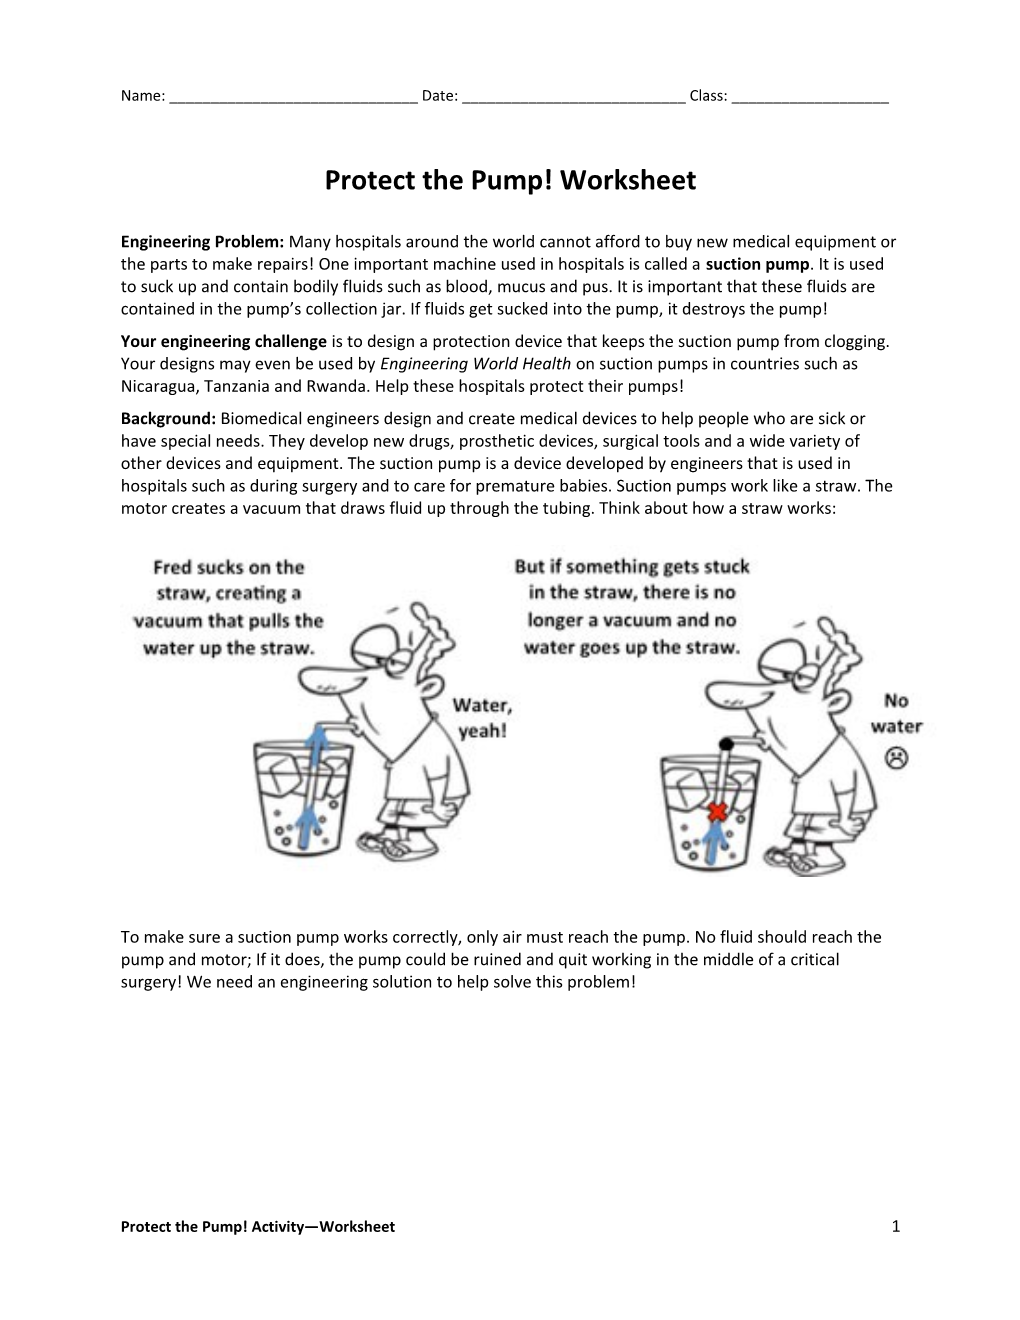 Protectthe Pump! Worksheet